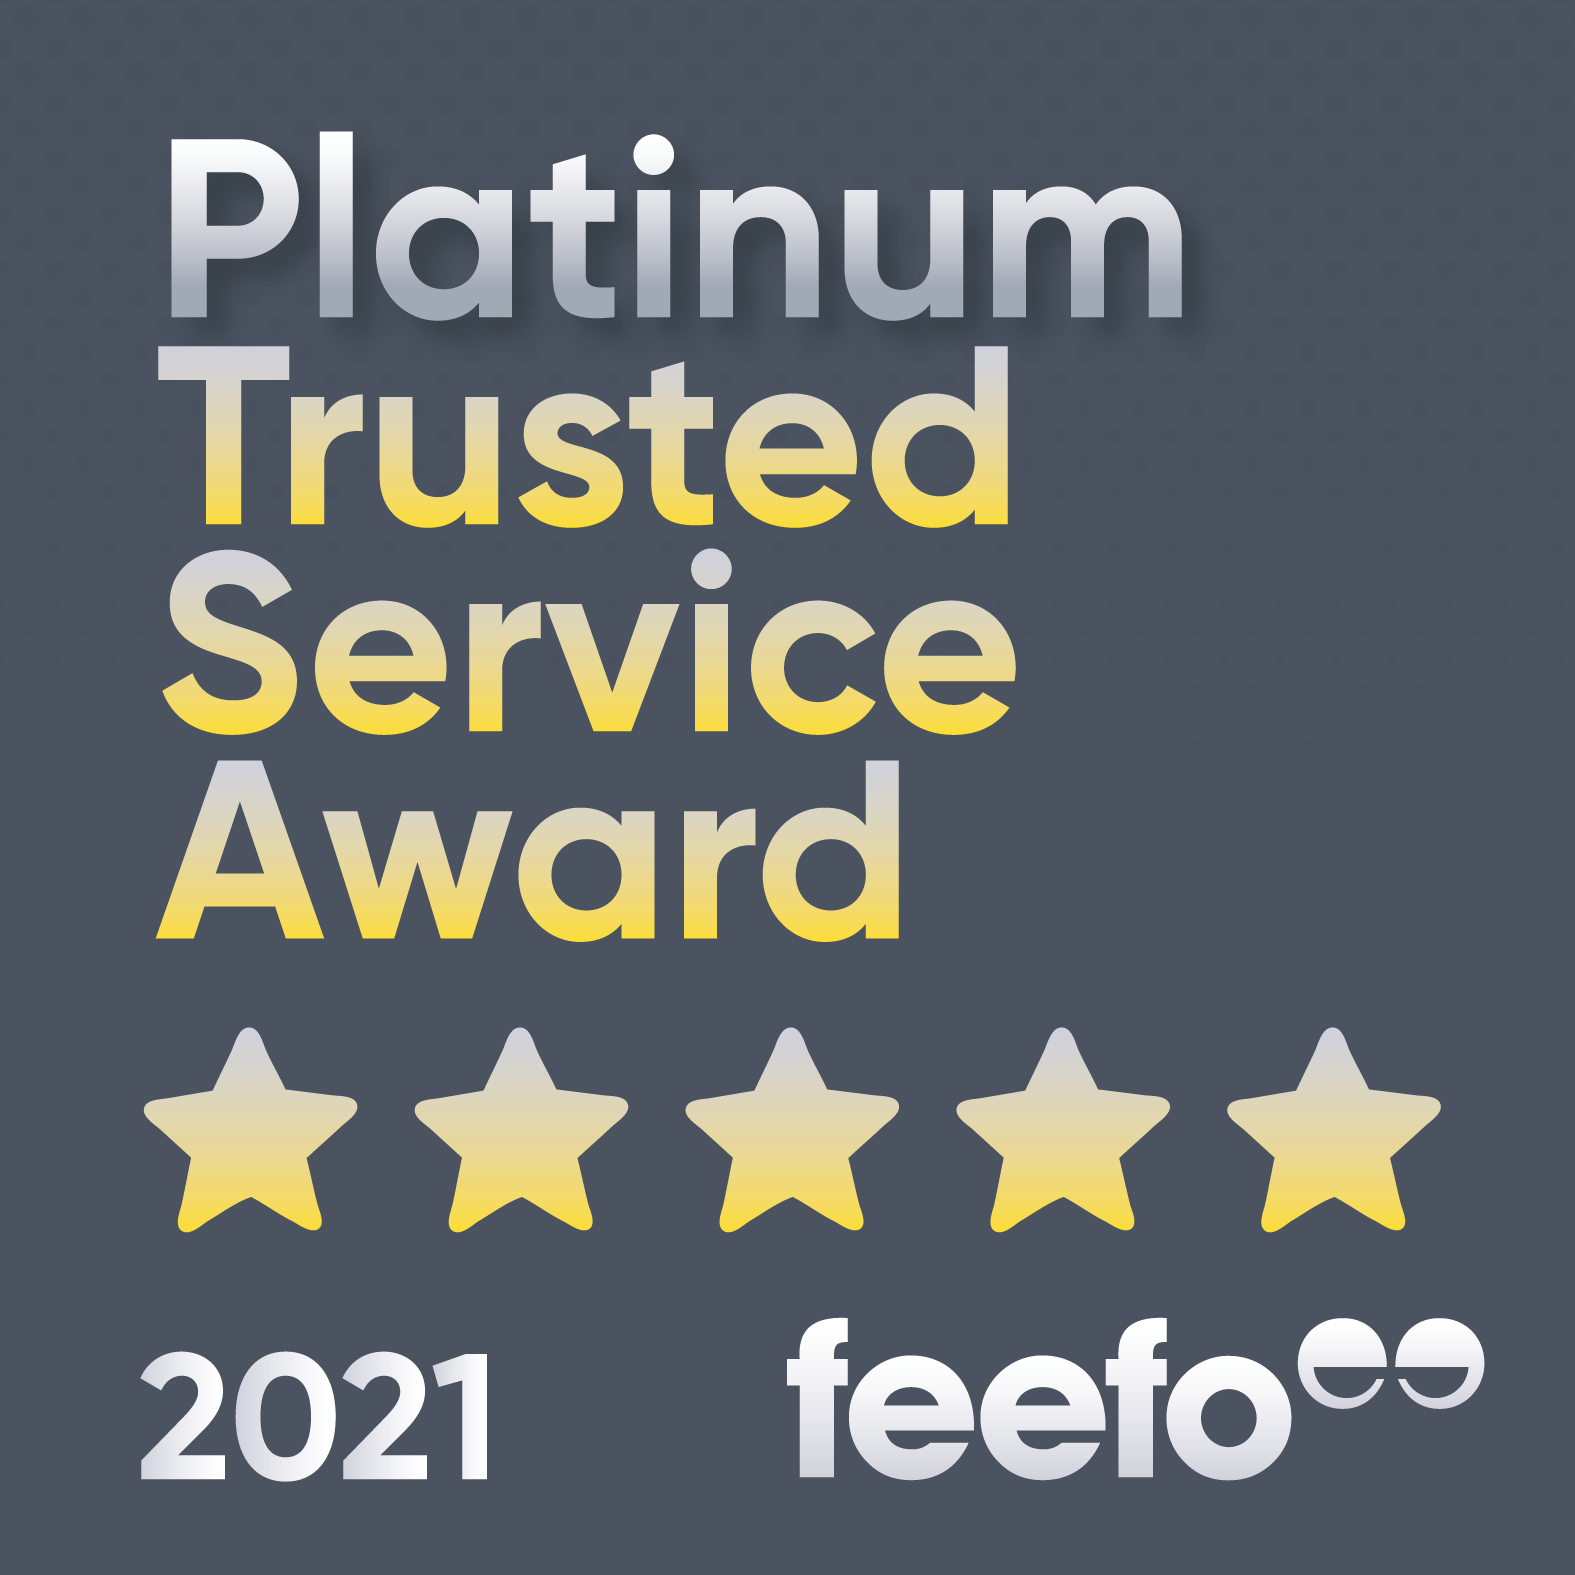 trusted service award feefo